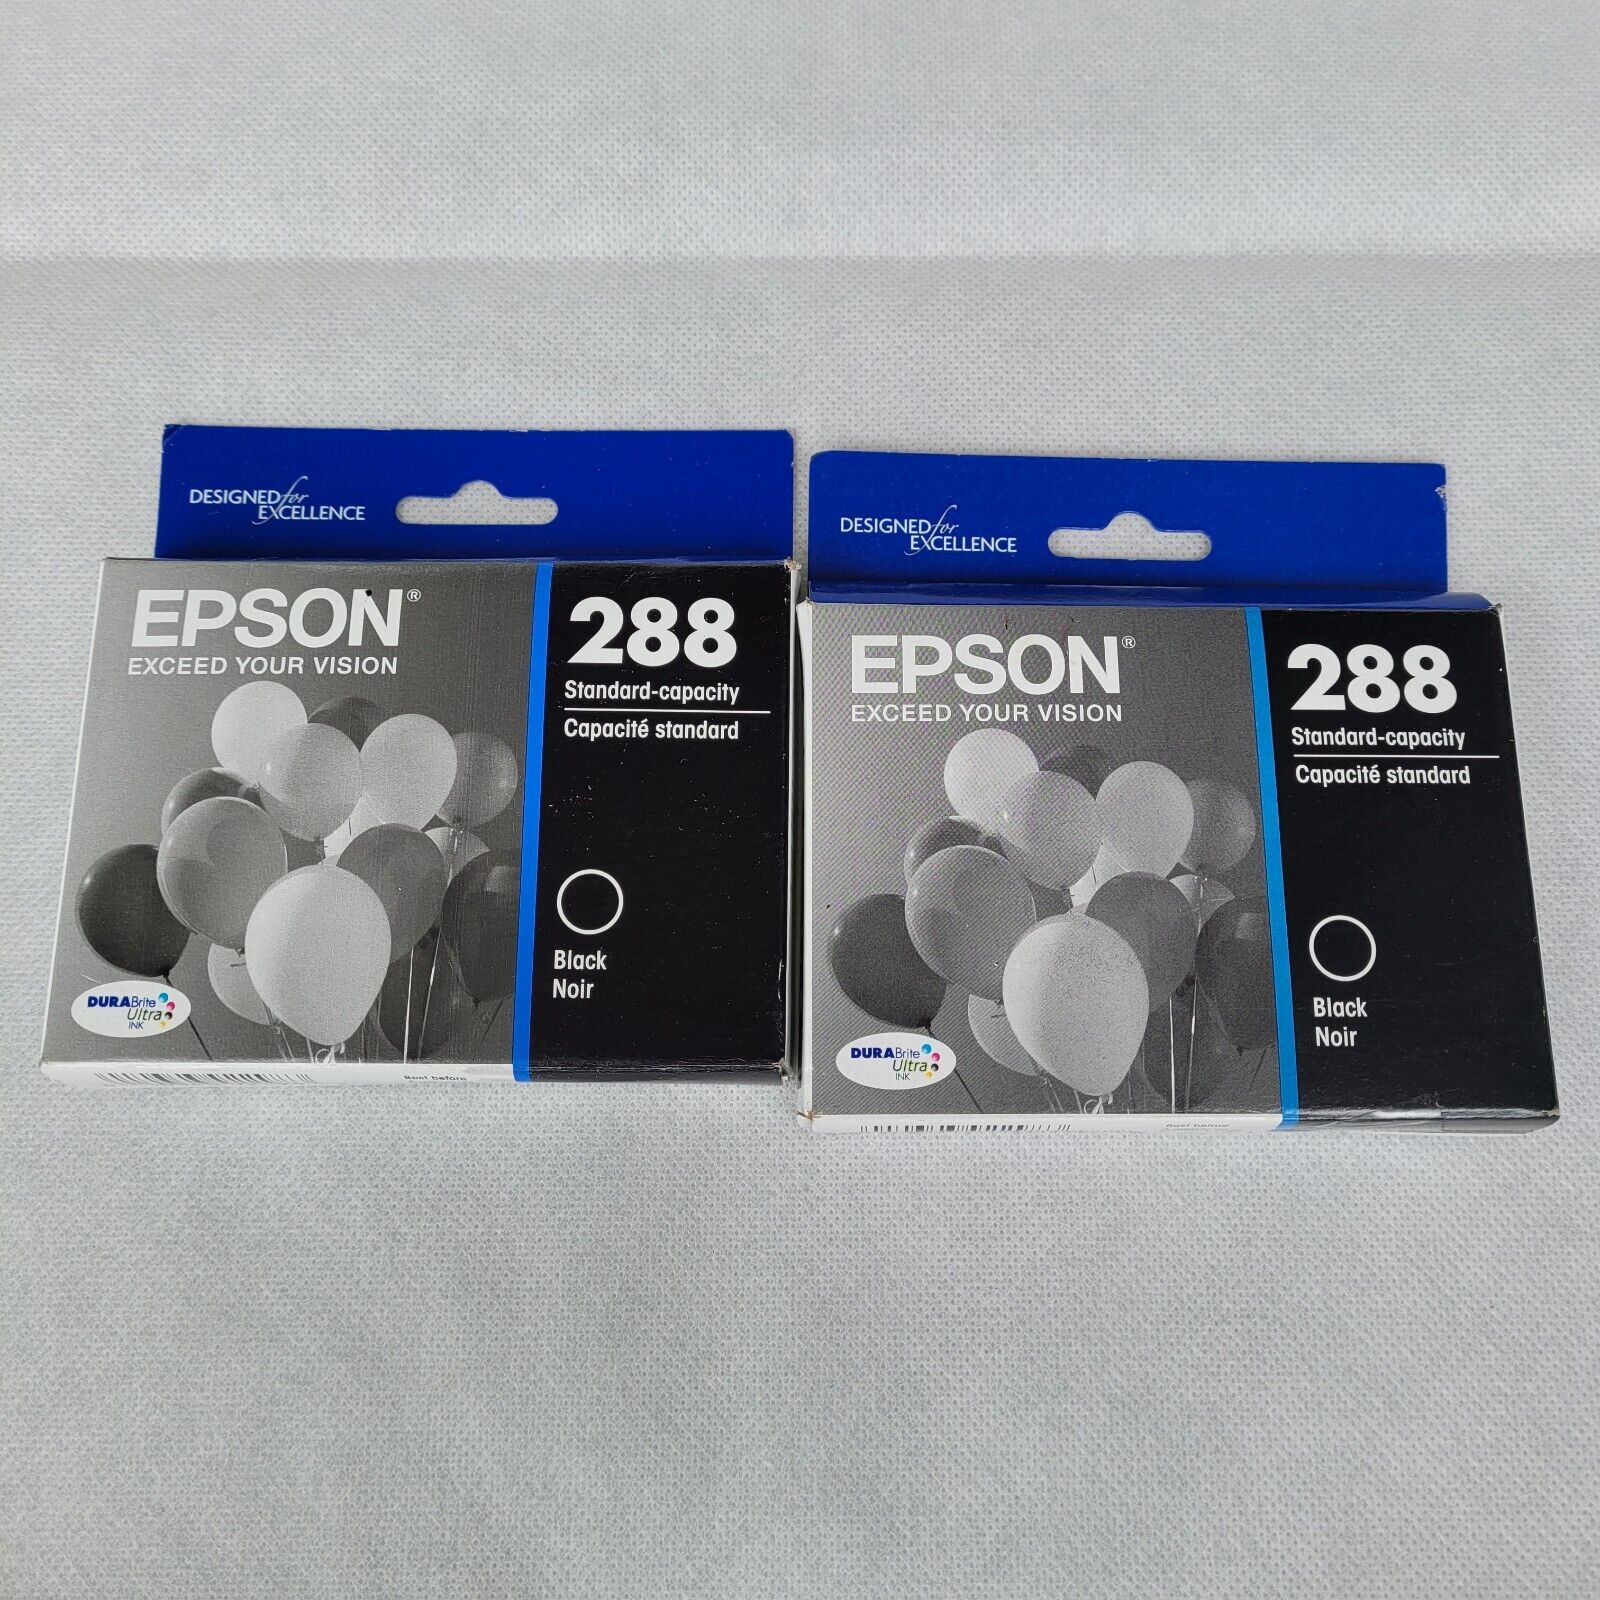 Epson Genuine 288 Standard Capacity Black Ink Exp 7/2026 & 2/2027 Lot of 2